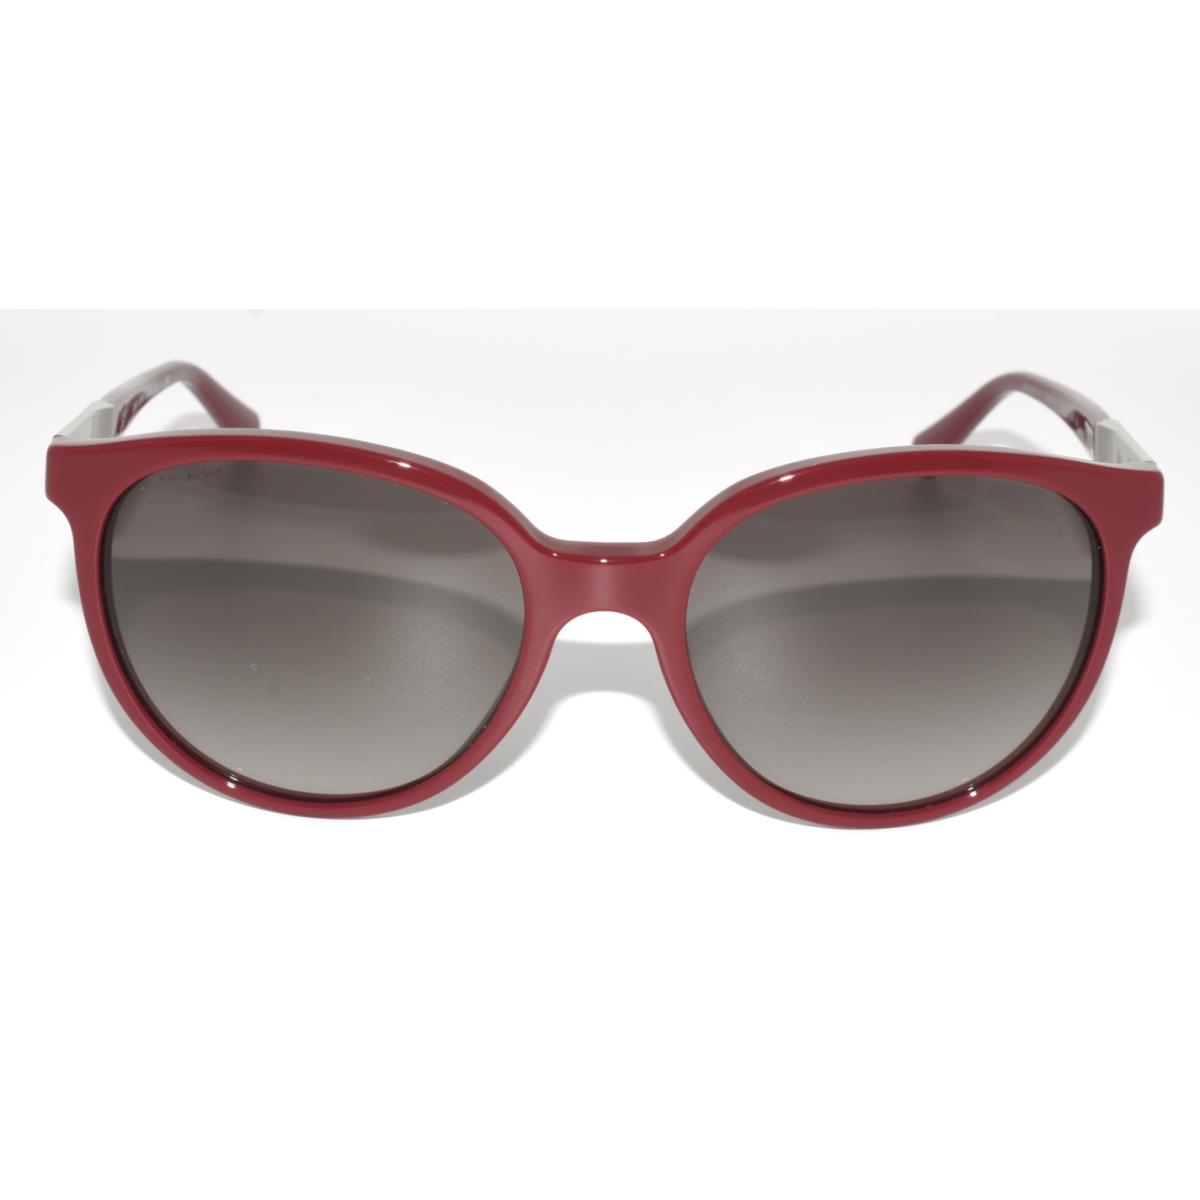 Giorgio Armani sunglasses  - Red Brown Frame, Gray Lens 1